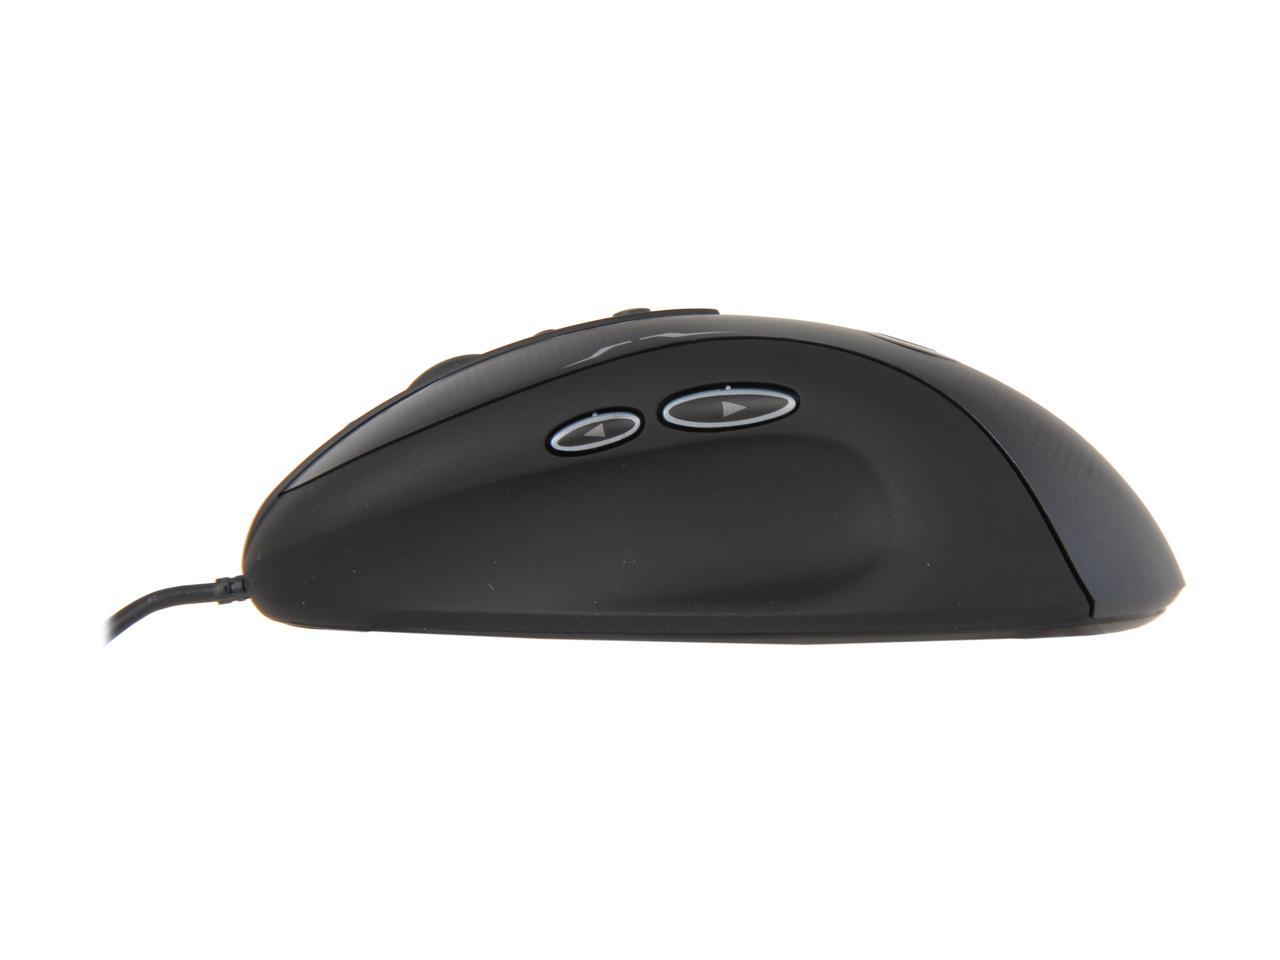 Logitech-910-002279 Optical Gaming Mouse G400 